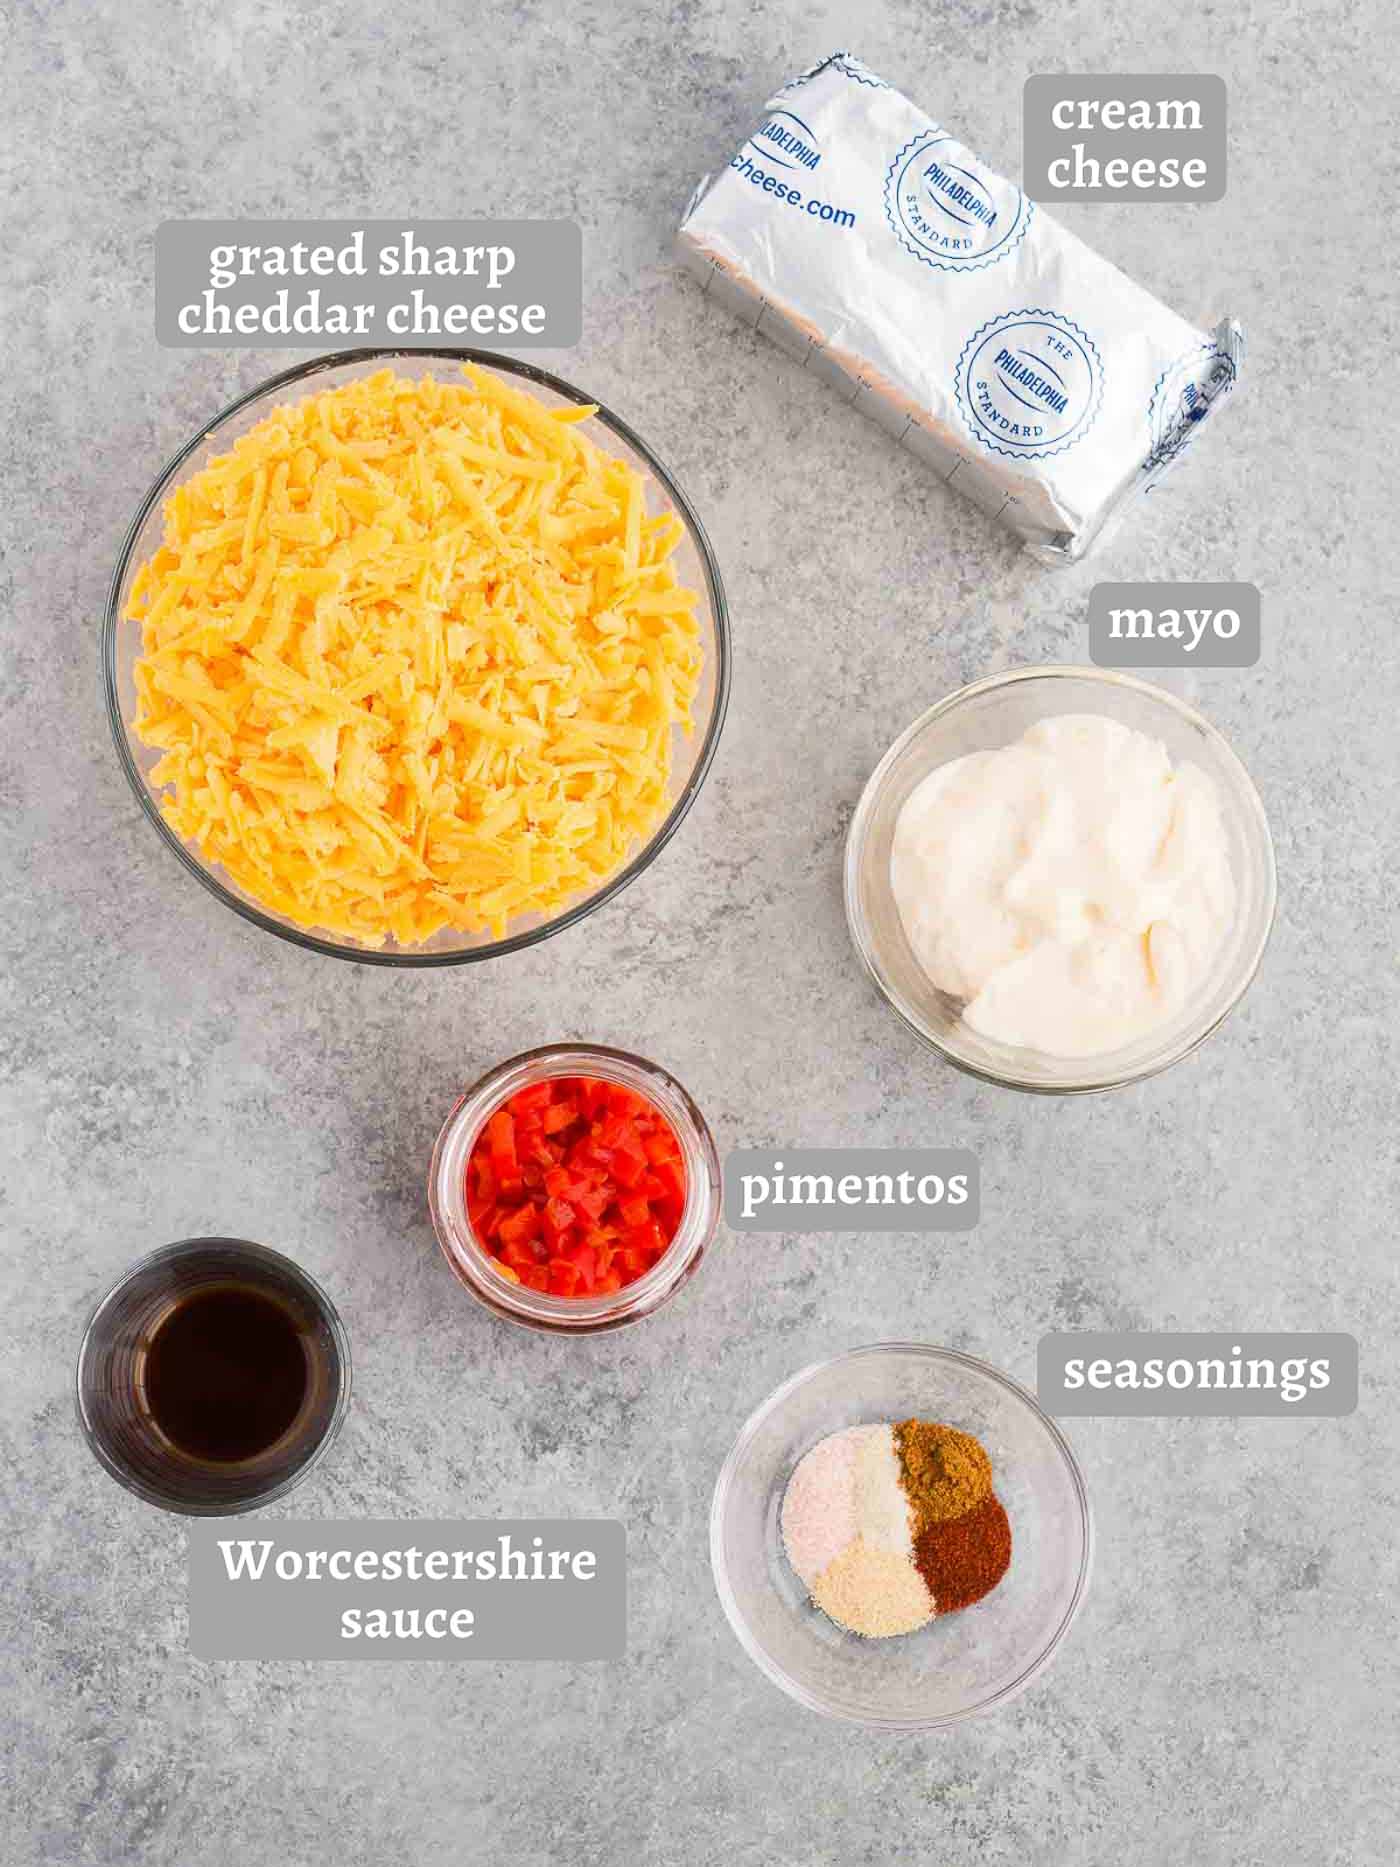 pimento cheese ingredients